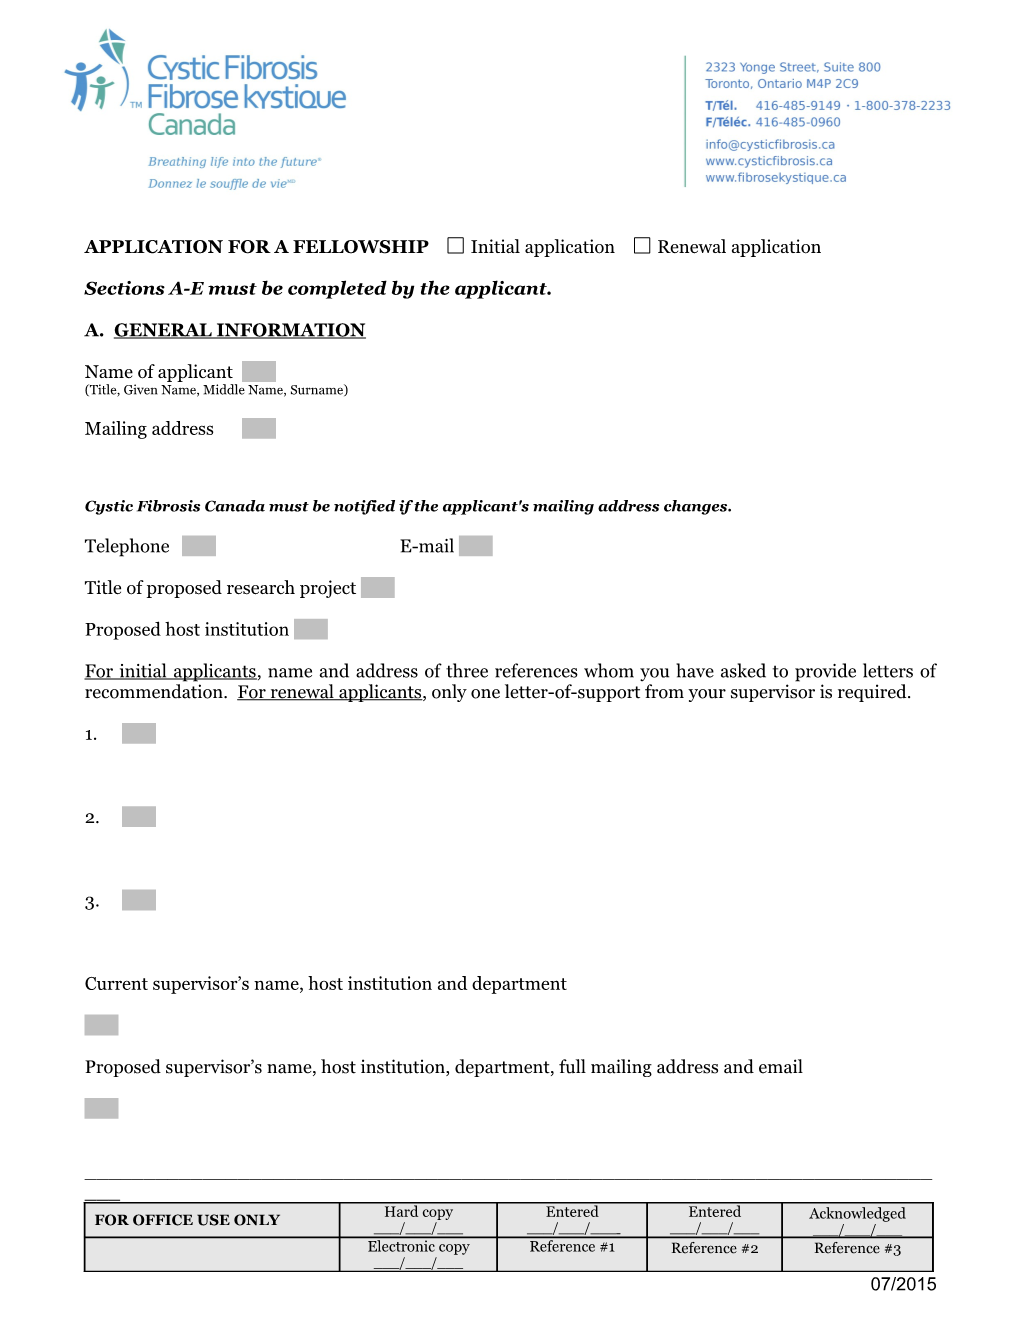 CFC Fellowship Application Form 2011